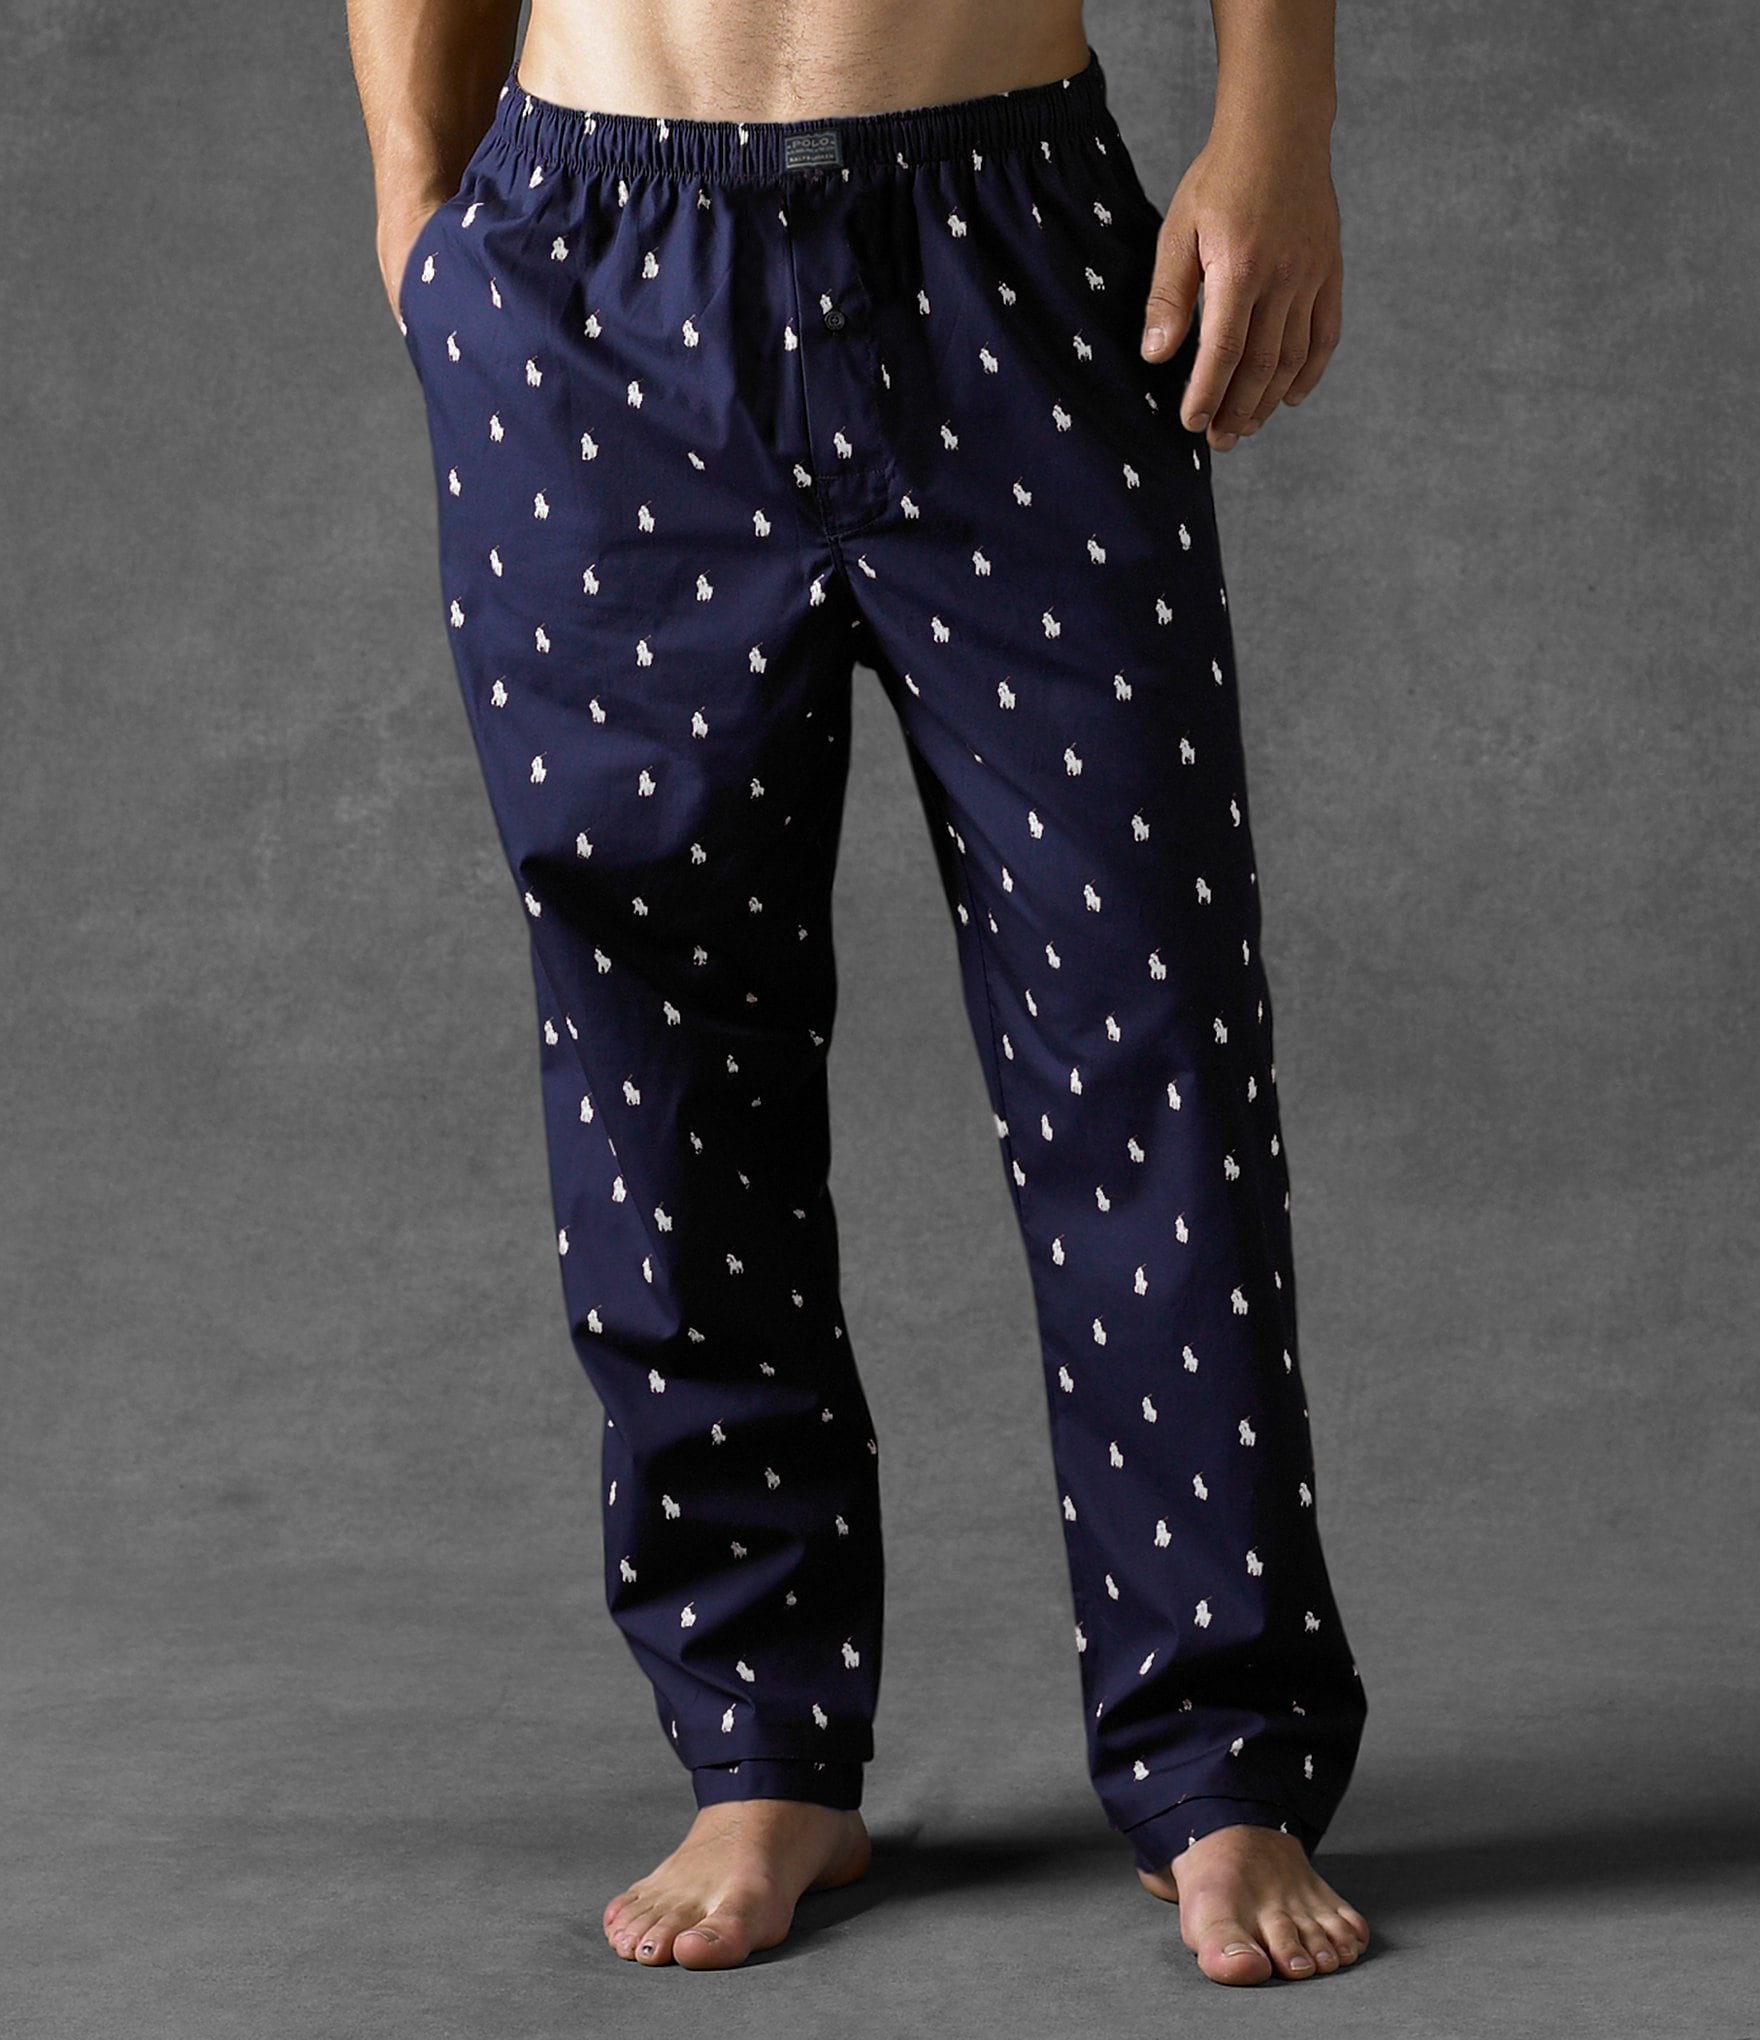 polo ralph lauren women's pajamas